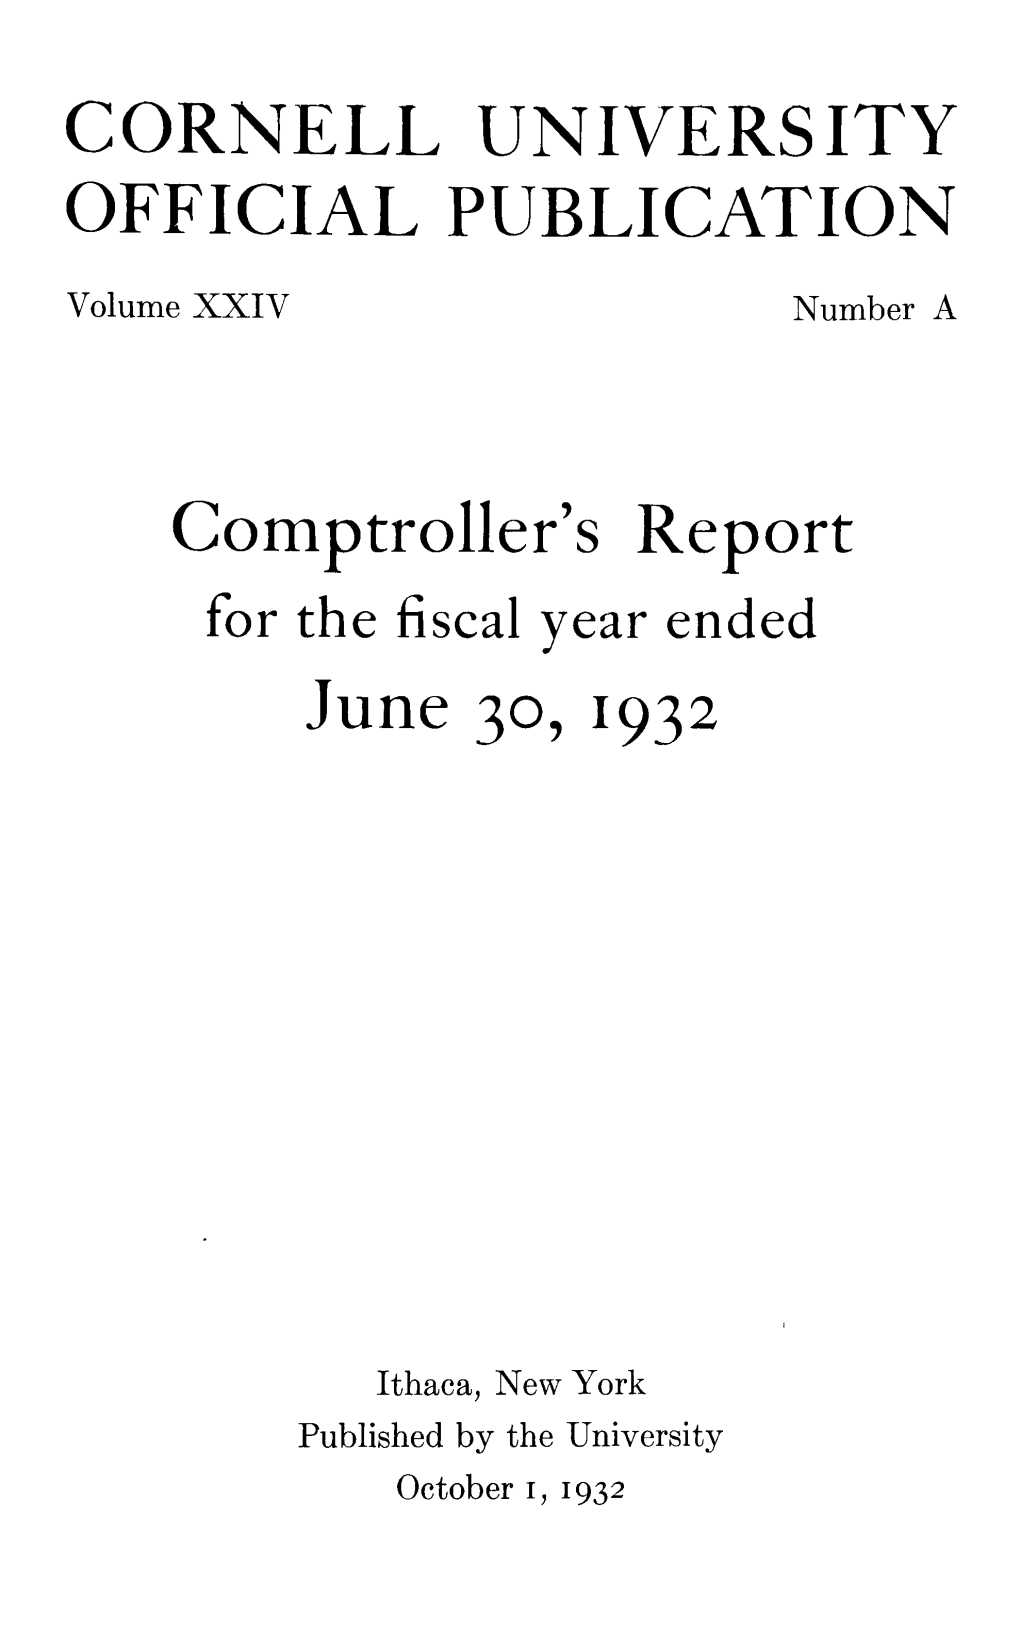 Comptroller's Report